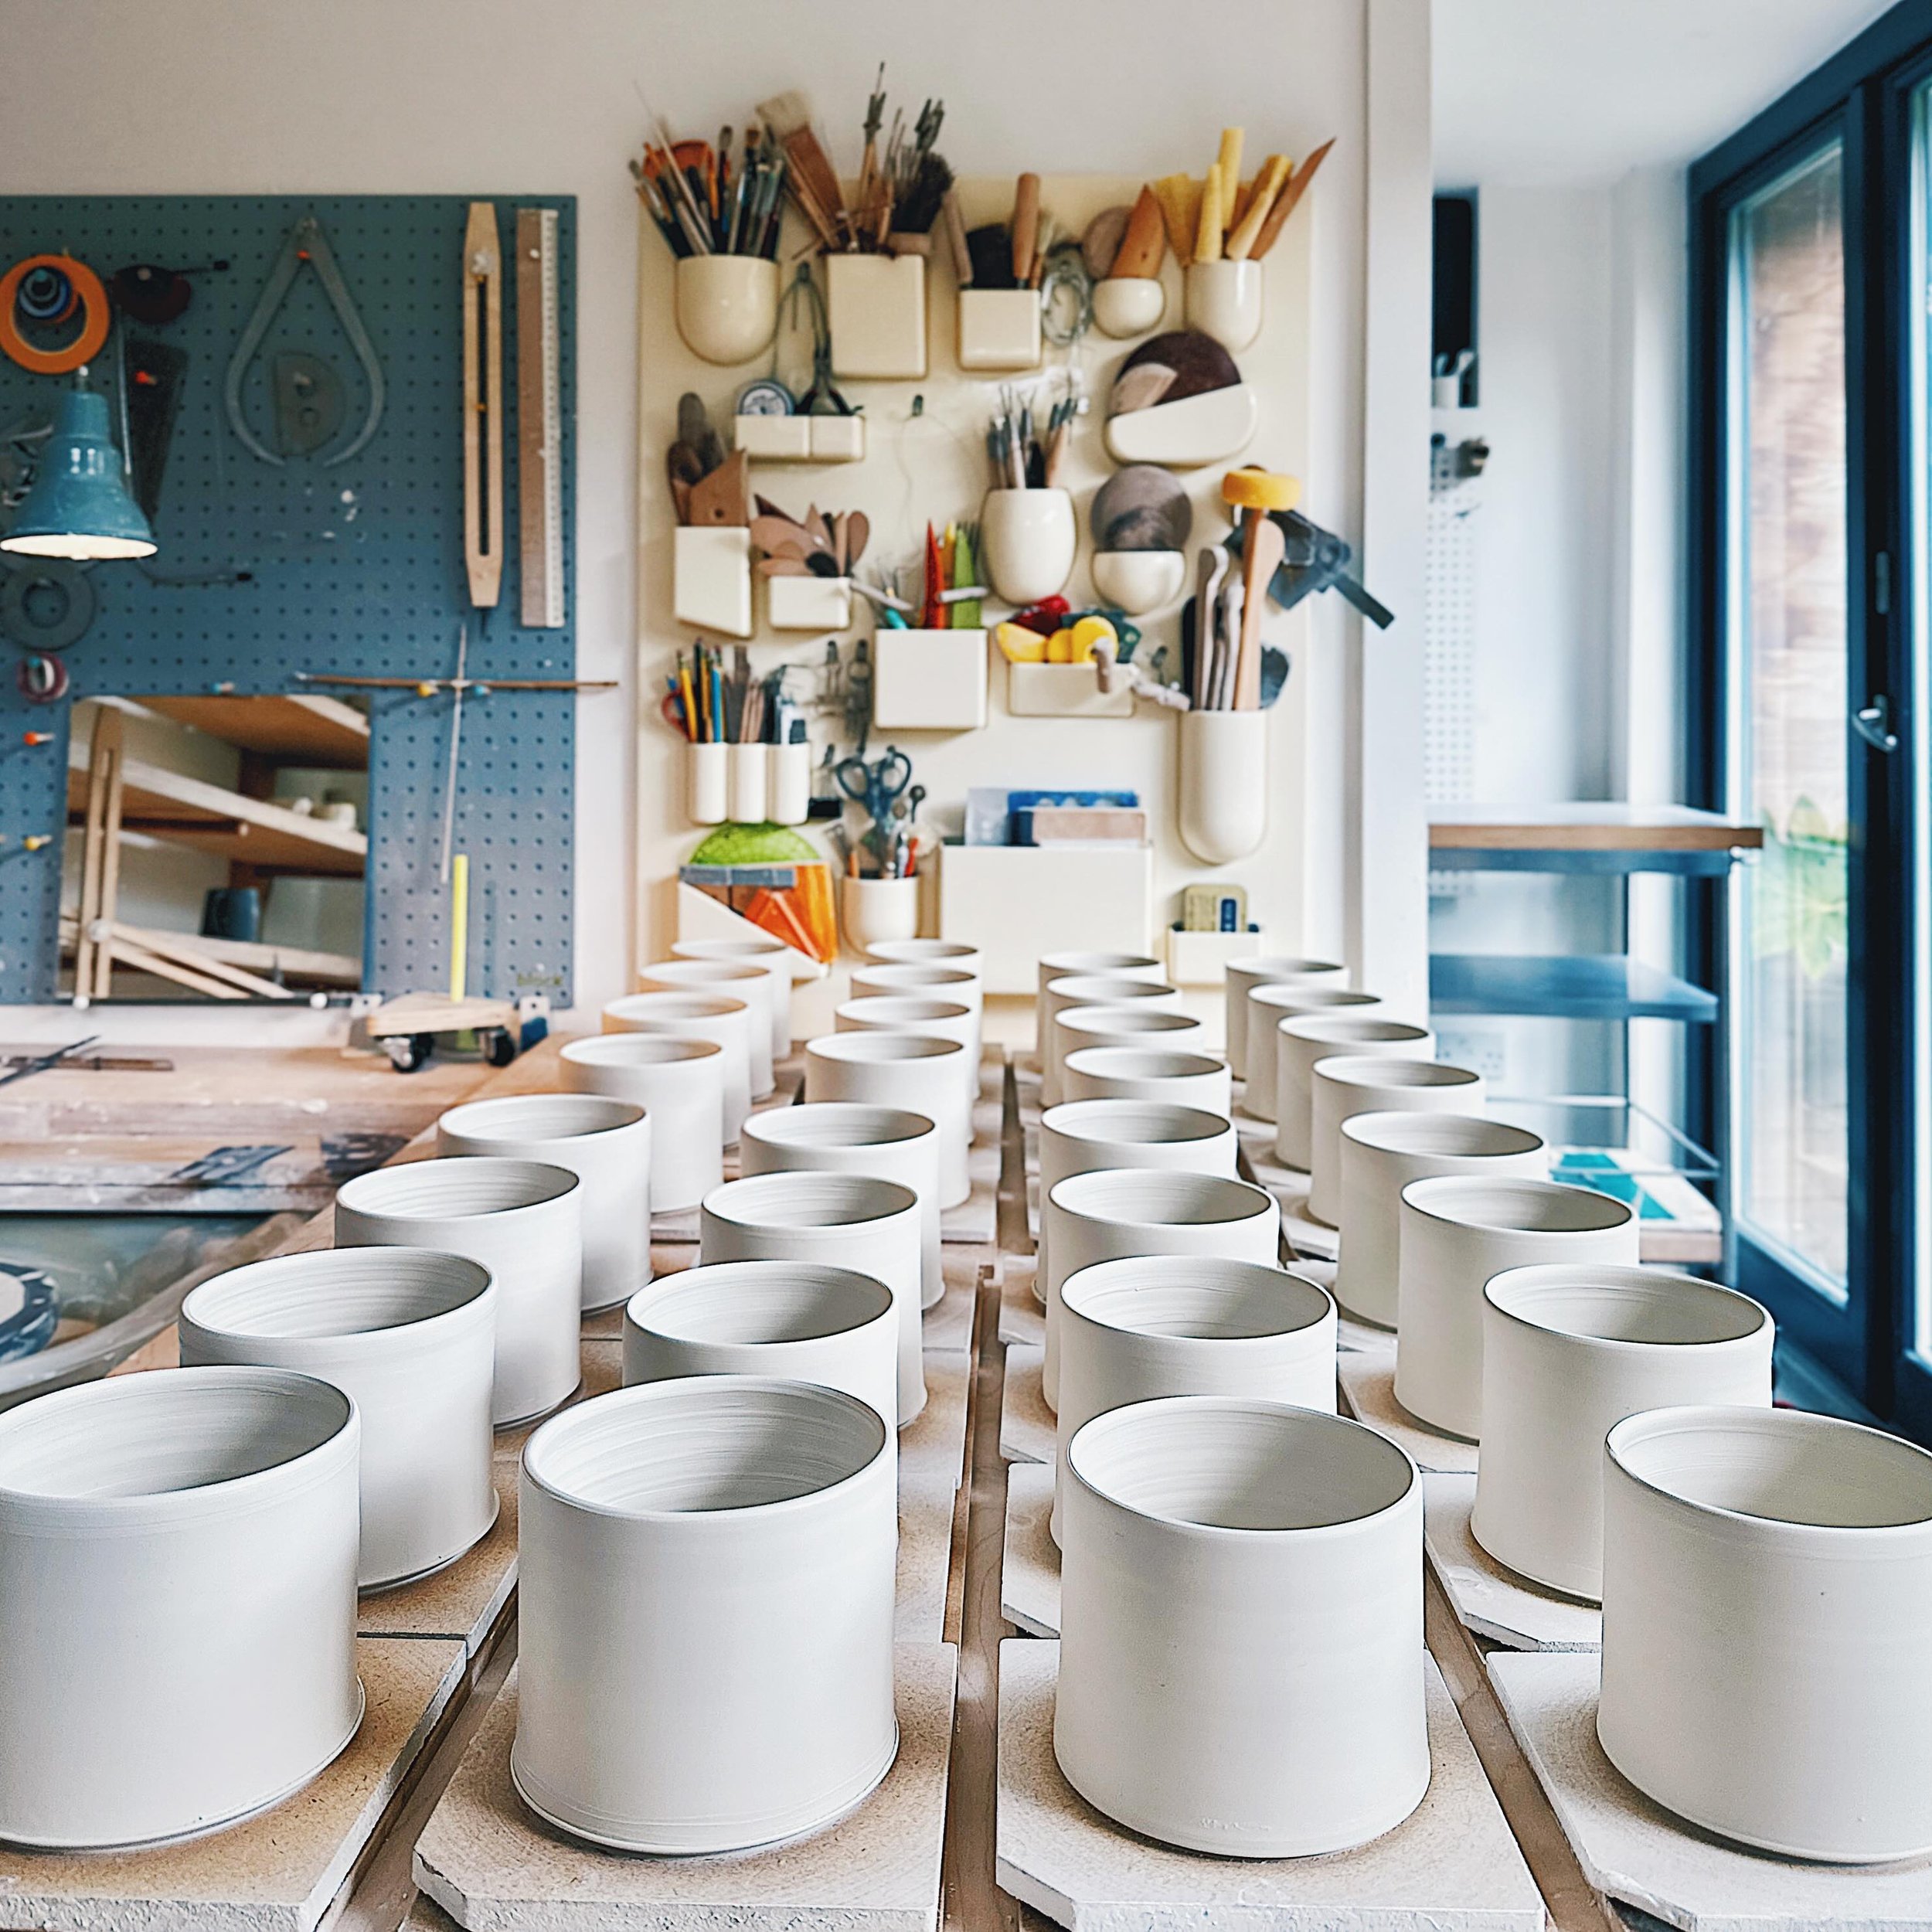 Studio table full of mug bodies ready to be turned 
.
.
.
.

#handmade #wheelthrown #porcelain #slipware  #pottery #clay #bythelinepottery  #porcelainpottery #urbanpotter #modernceramics #studiopotter  #maker #contemporaryceramics  #functionalceramic